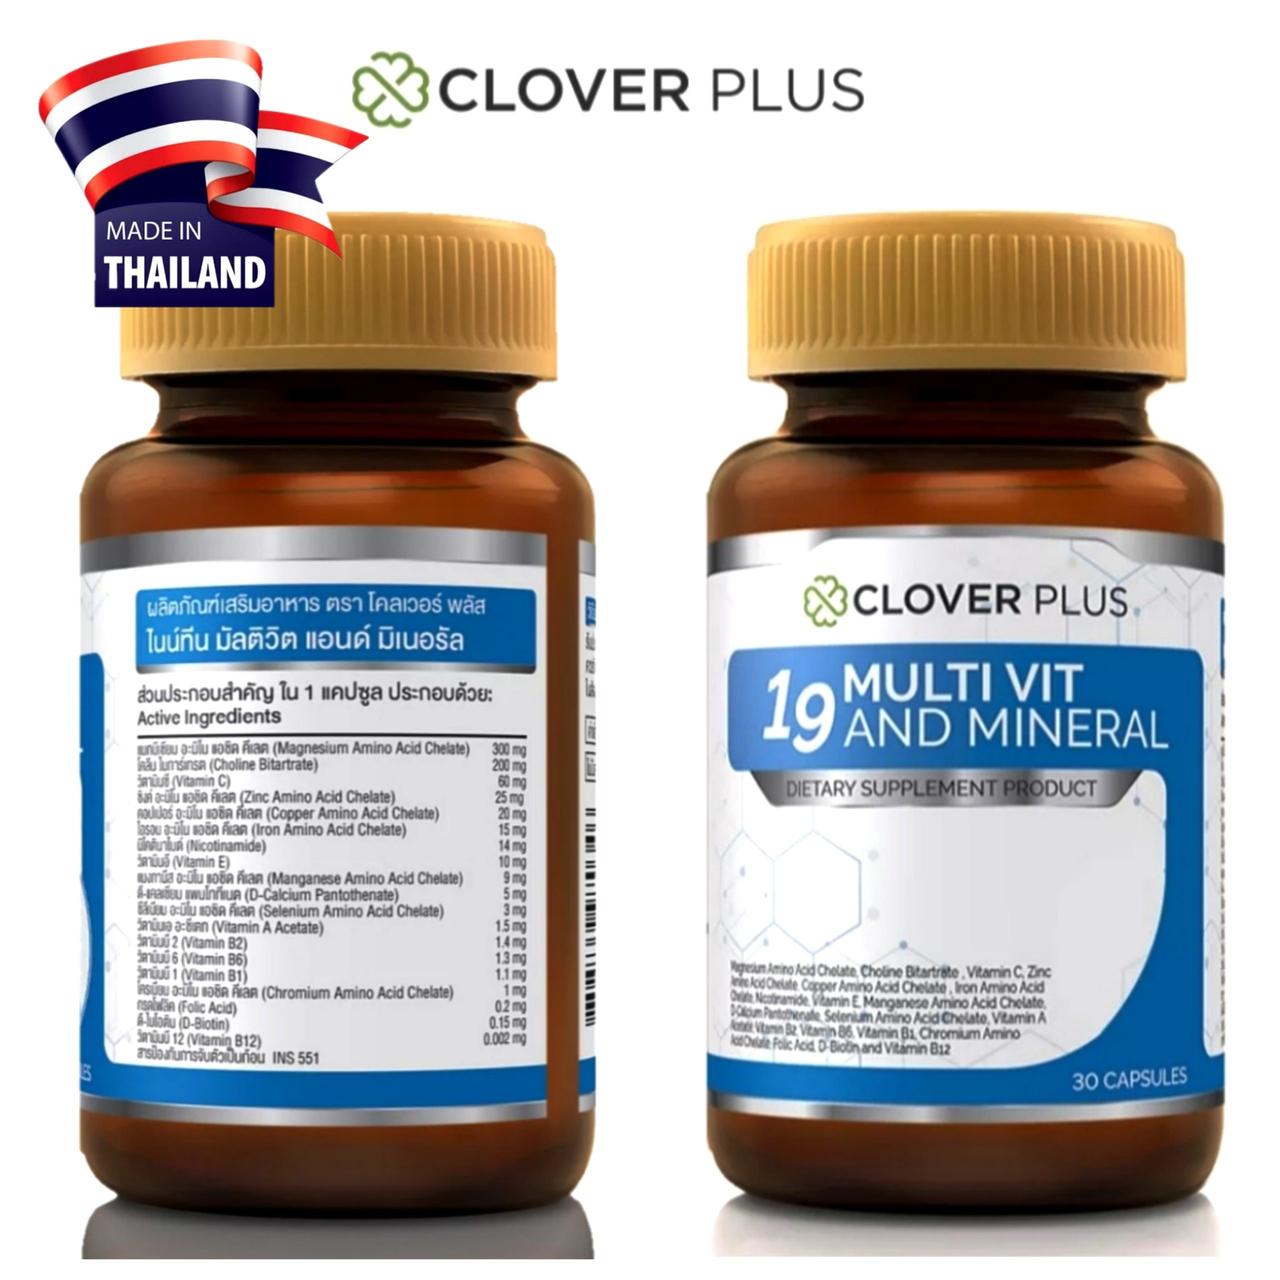 Мультивитаминный комплекс Clover Plus 19 Multivit and Mineral, 30 капсул. Таиланд